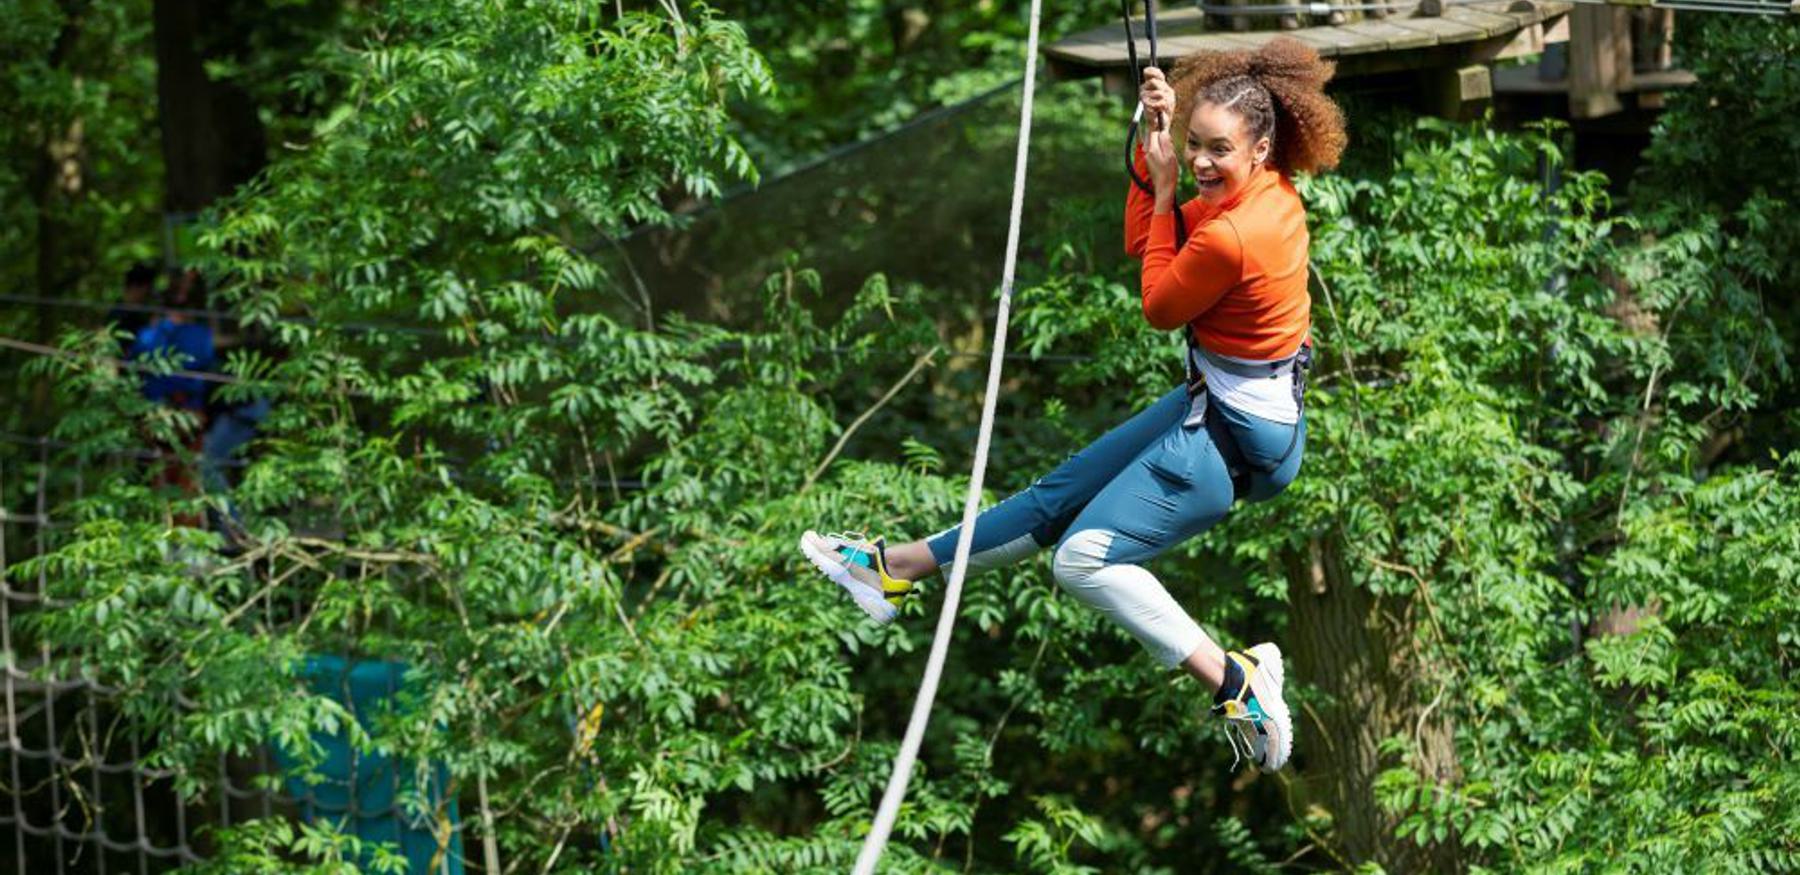 Tarzan Swing on Treetop Challenge at Go Ape Dalby